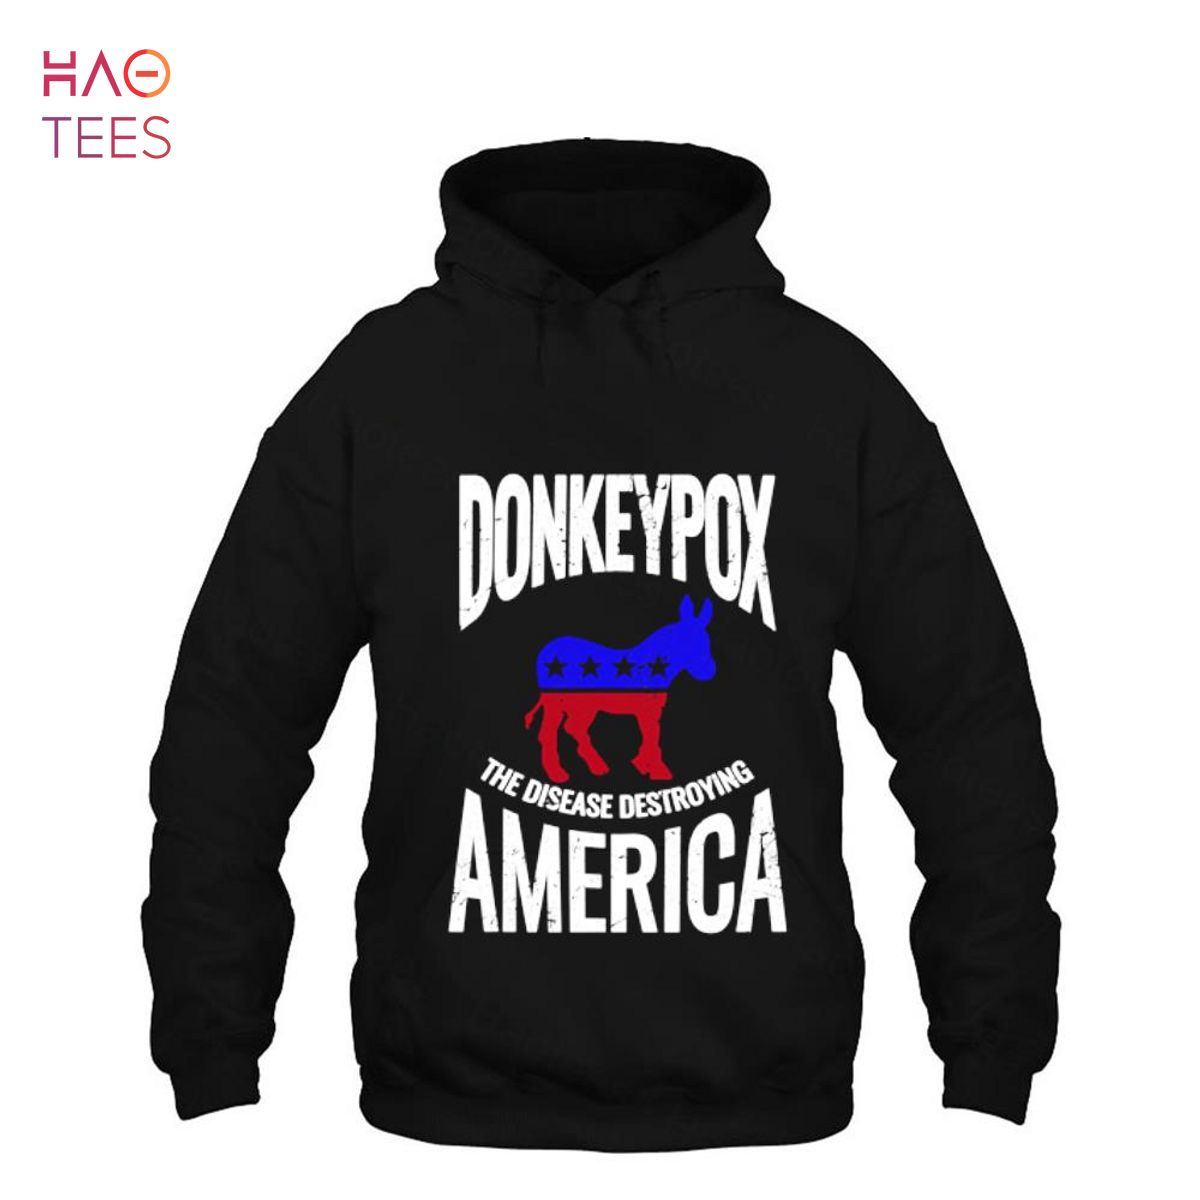 Donkey pox the disease destroying america funny Monkeypox Shirt